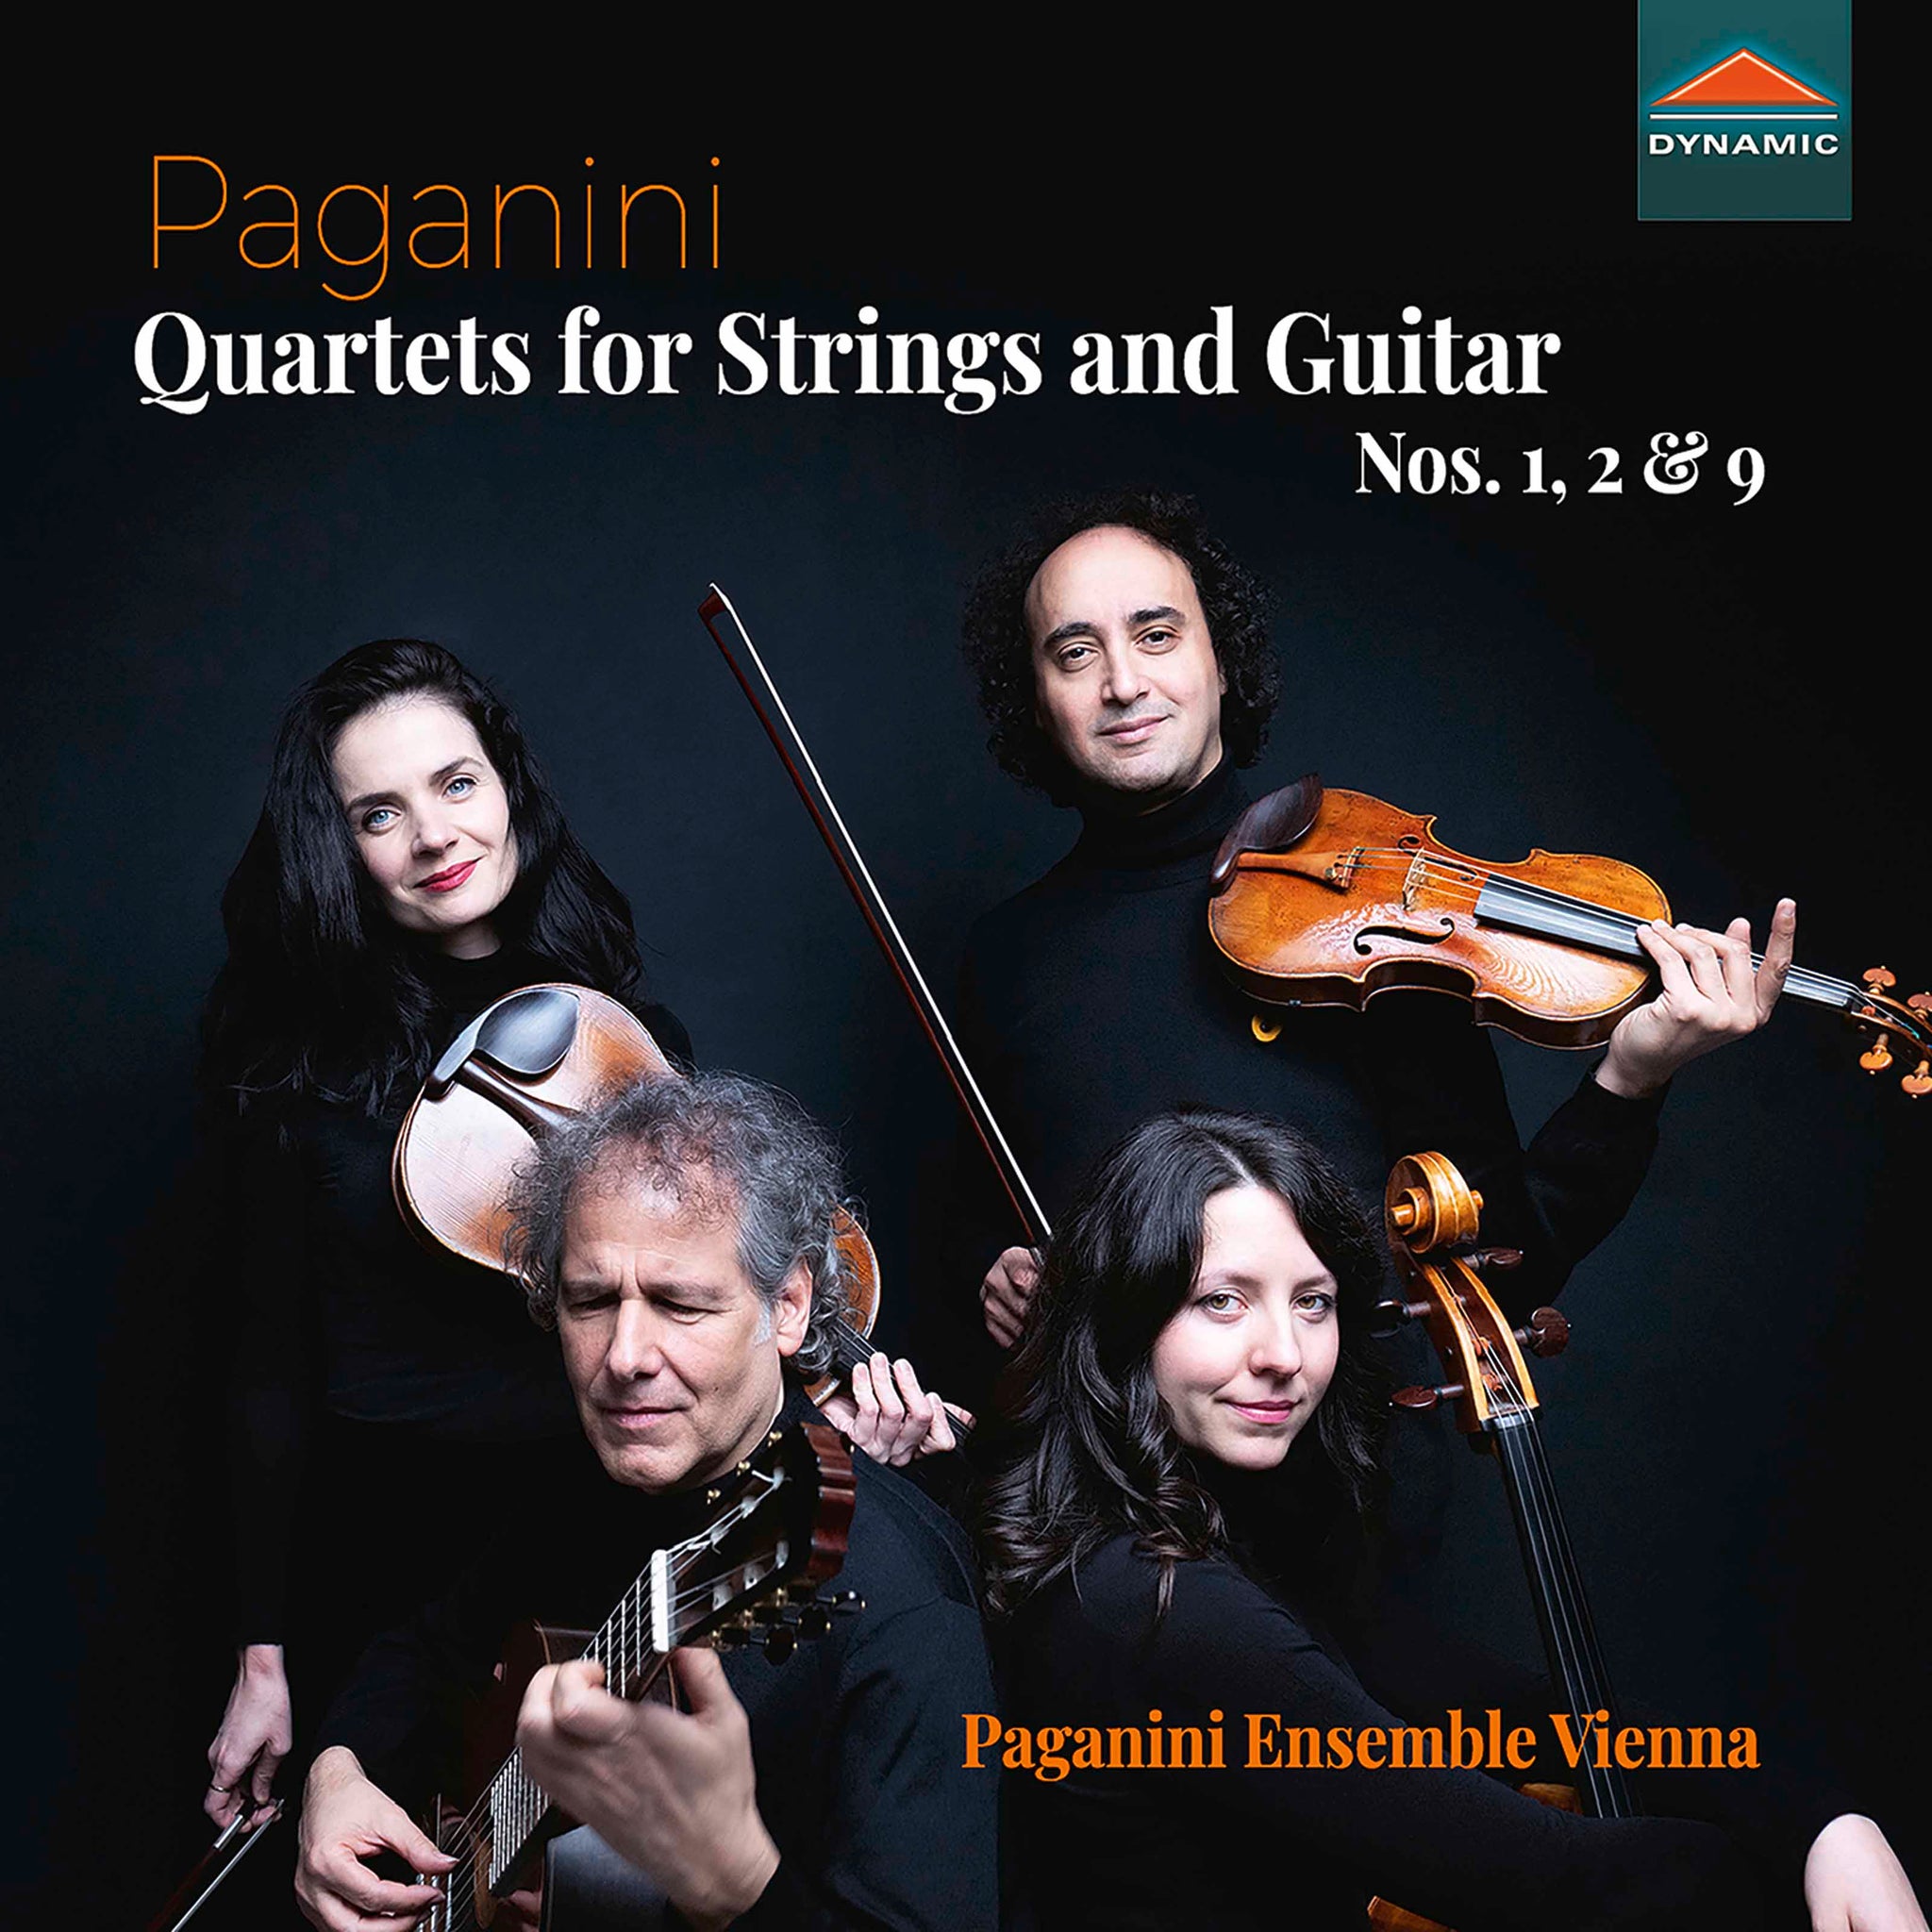 Paganini: Quartets for Strings and Guitar Nos. 1, 2 & 9 / Paganini Ensemble Vienna